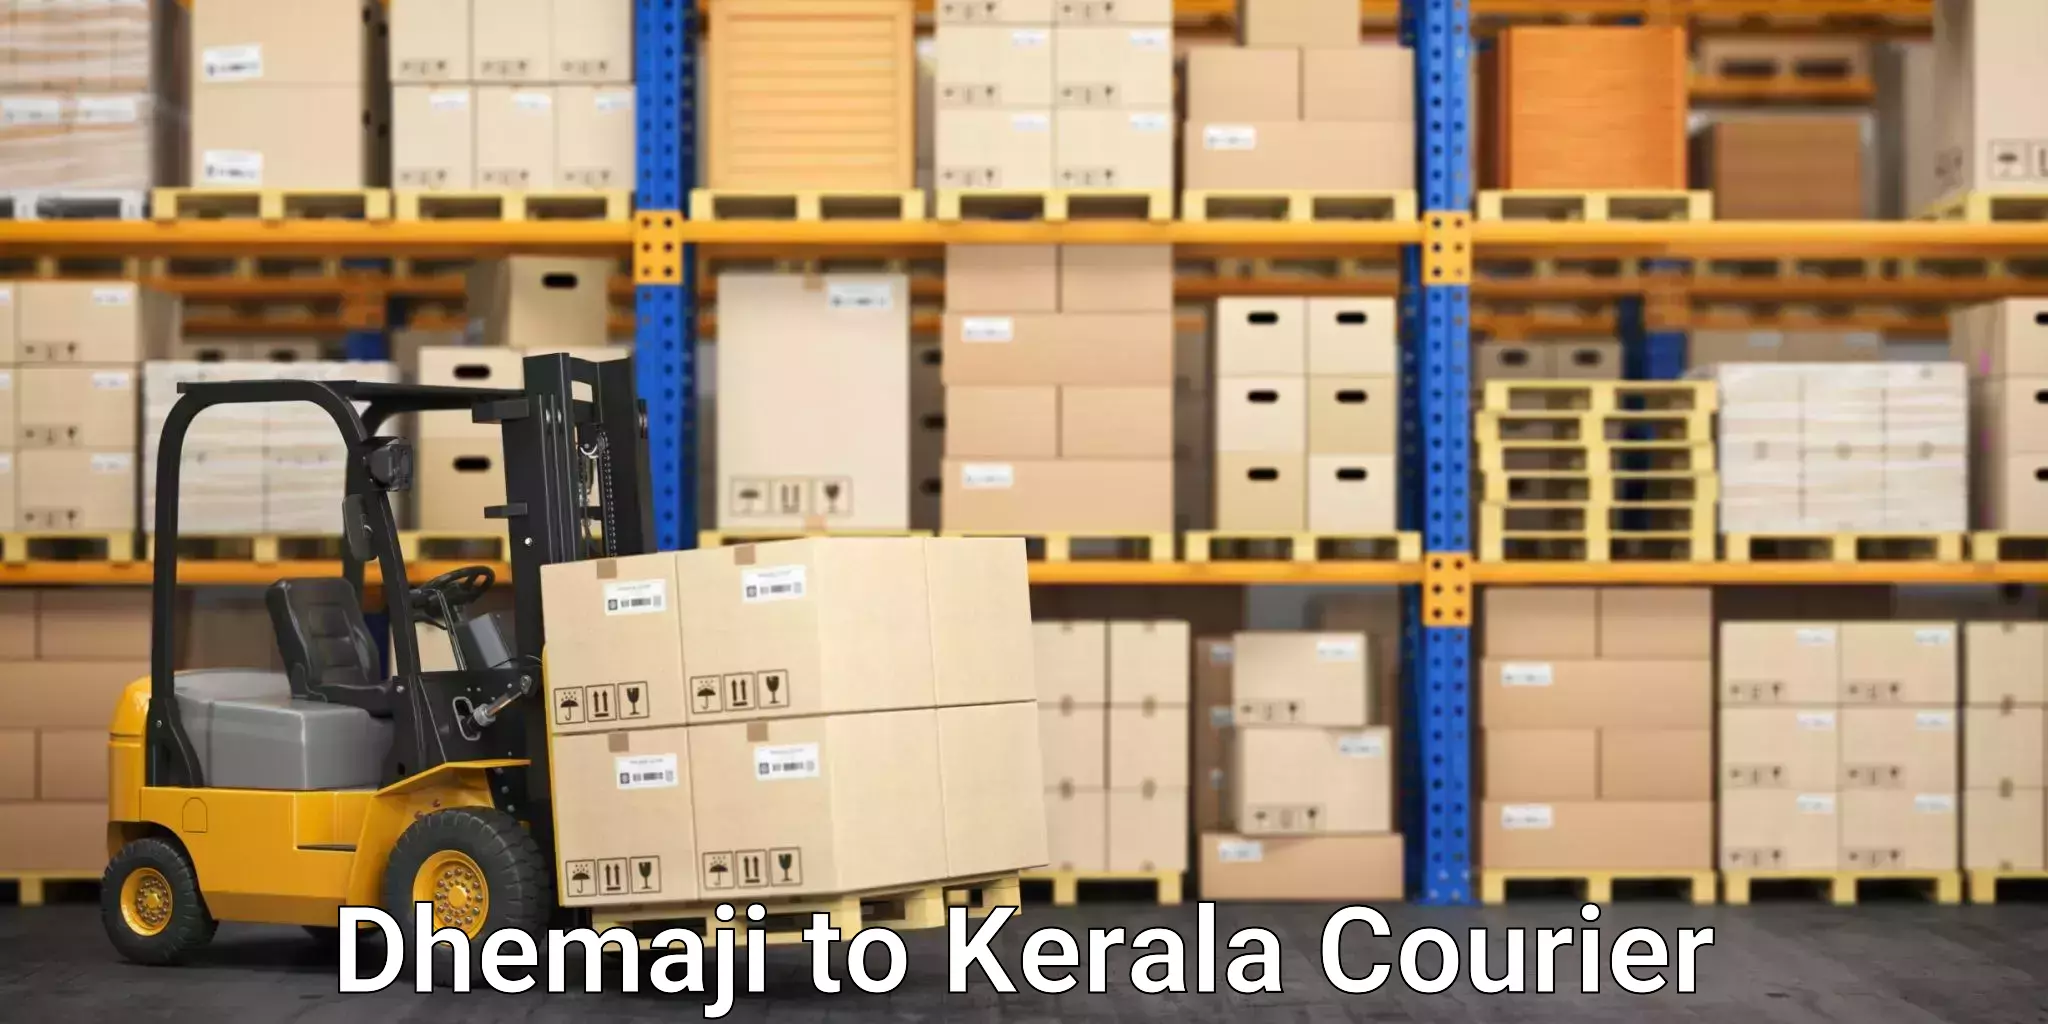 International courier networks Dhemaji to Kochi